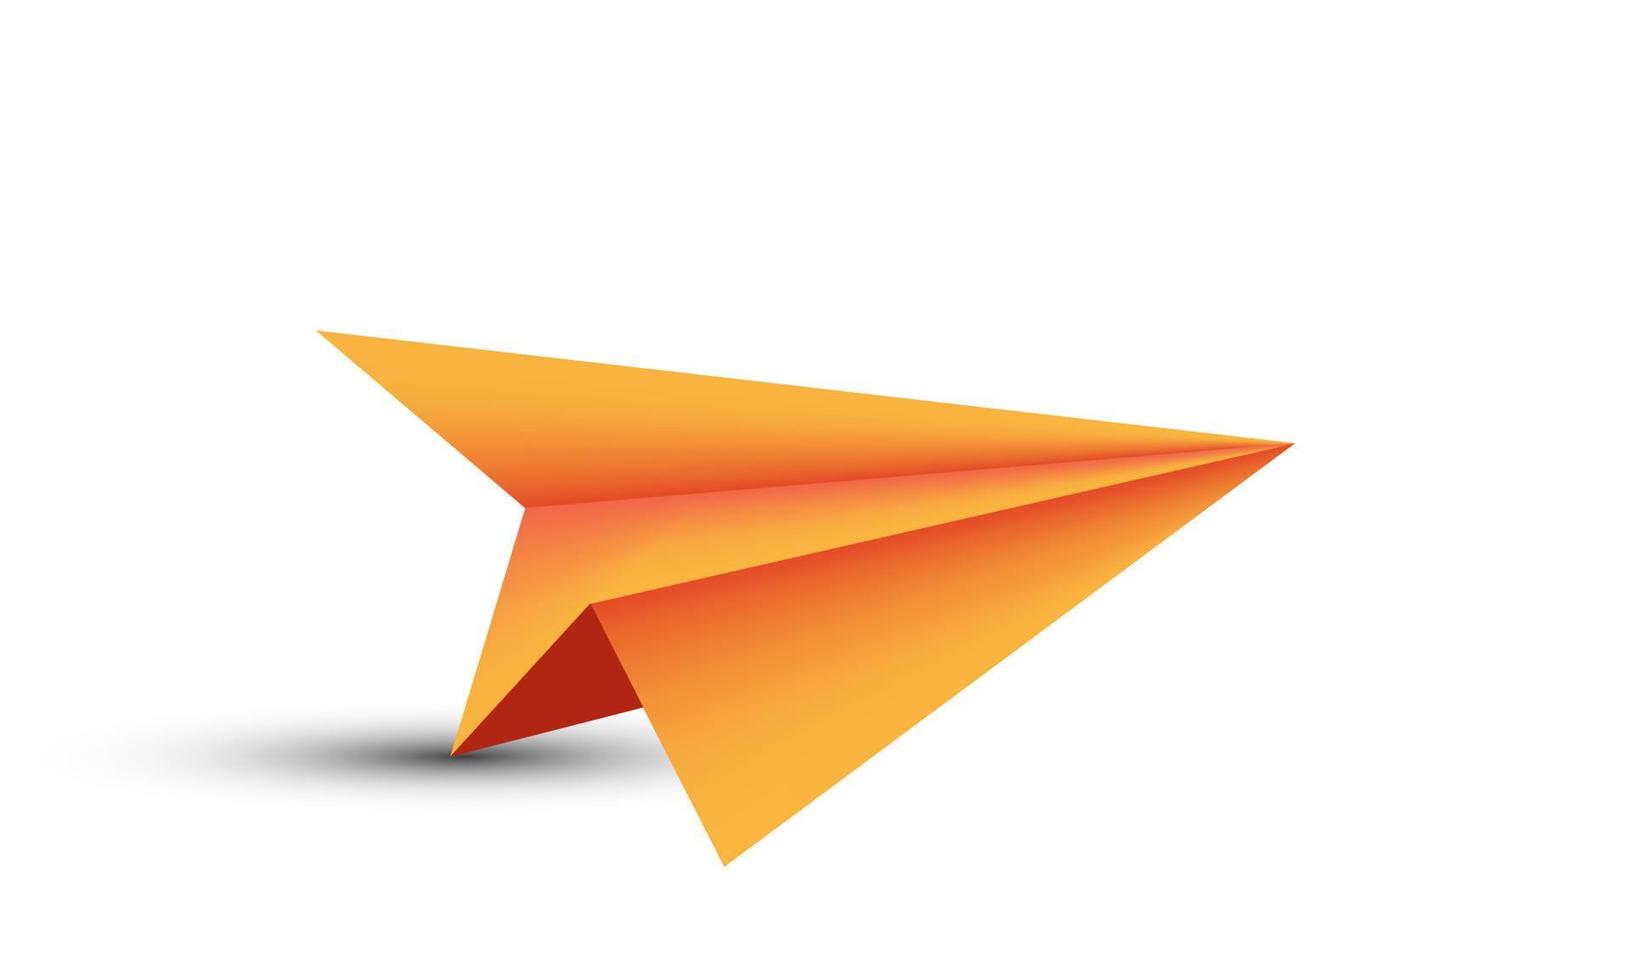 unique 3d paper airplane orange concept design icon isolated on vector